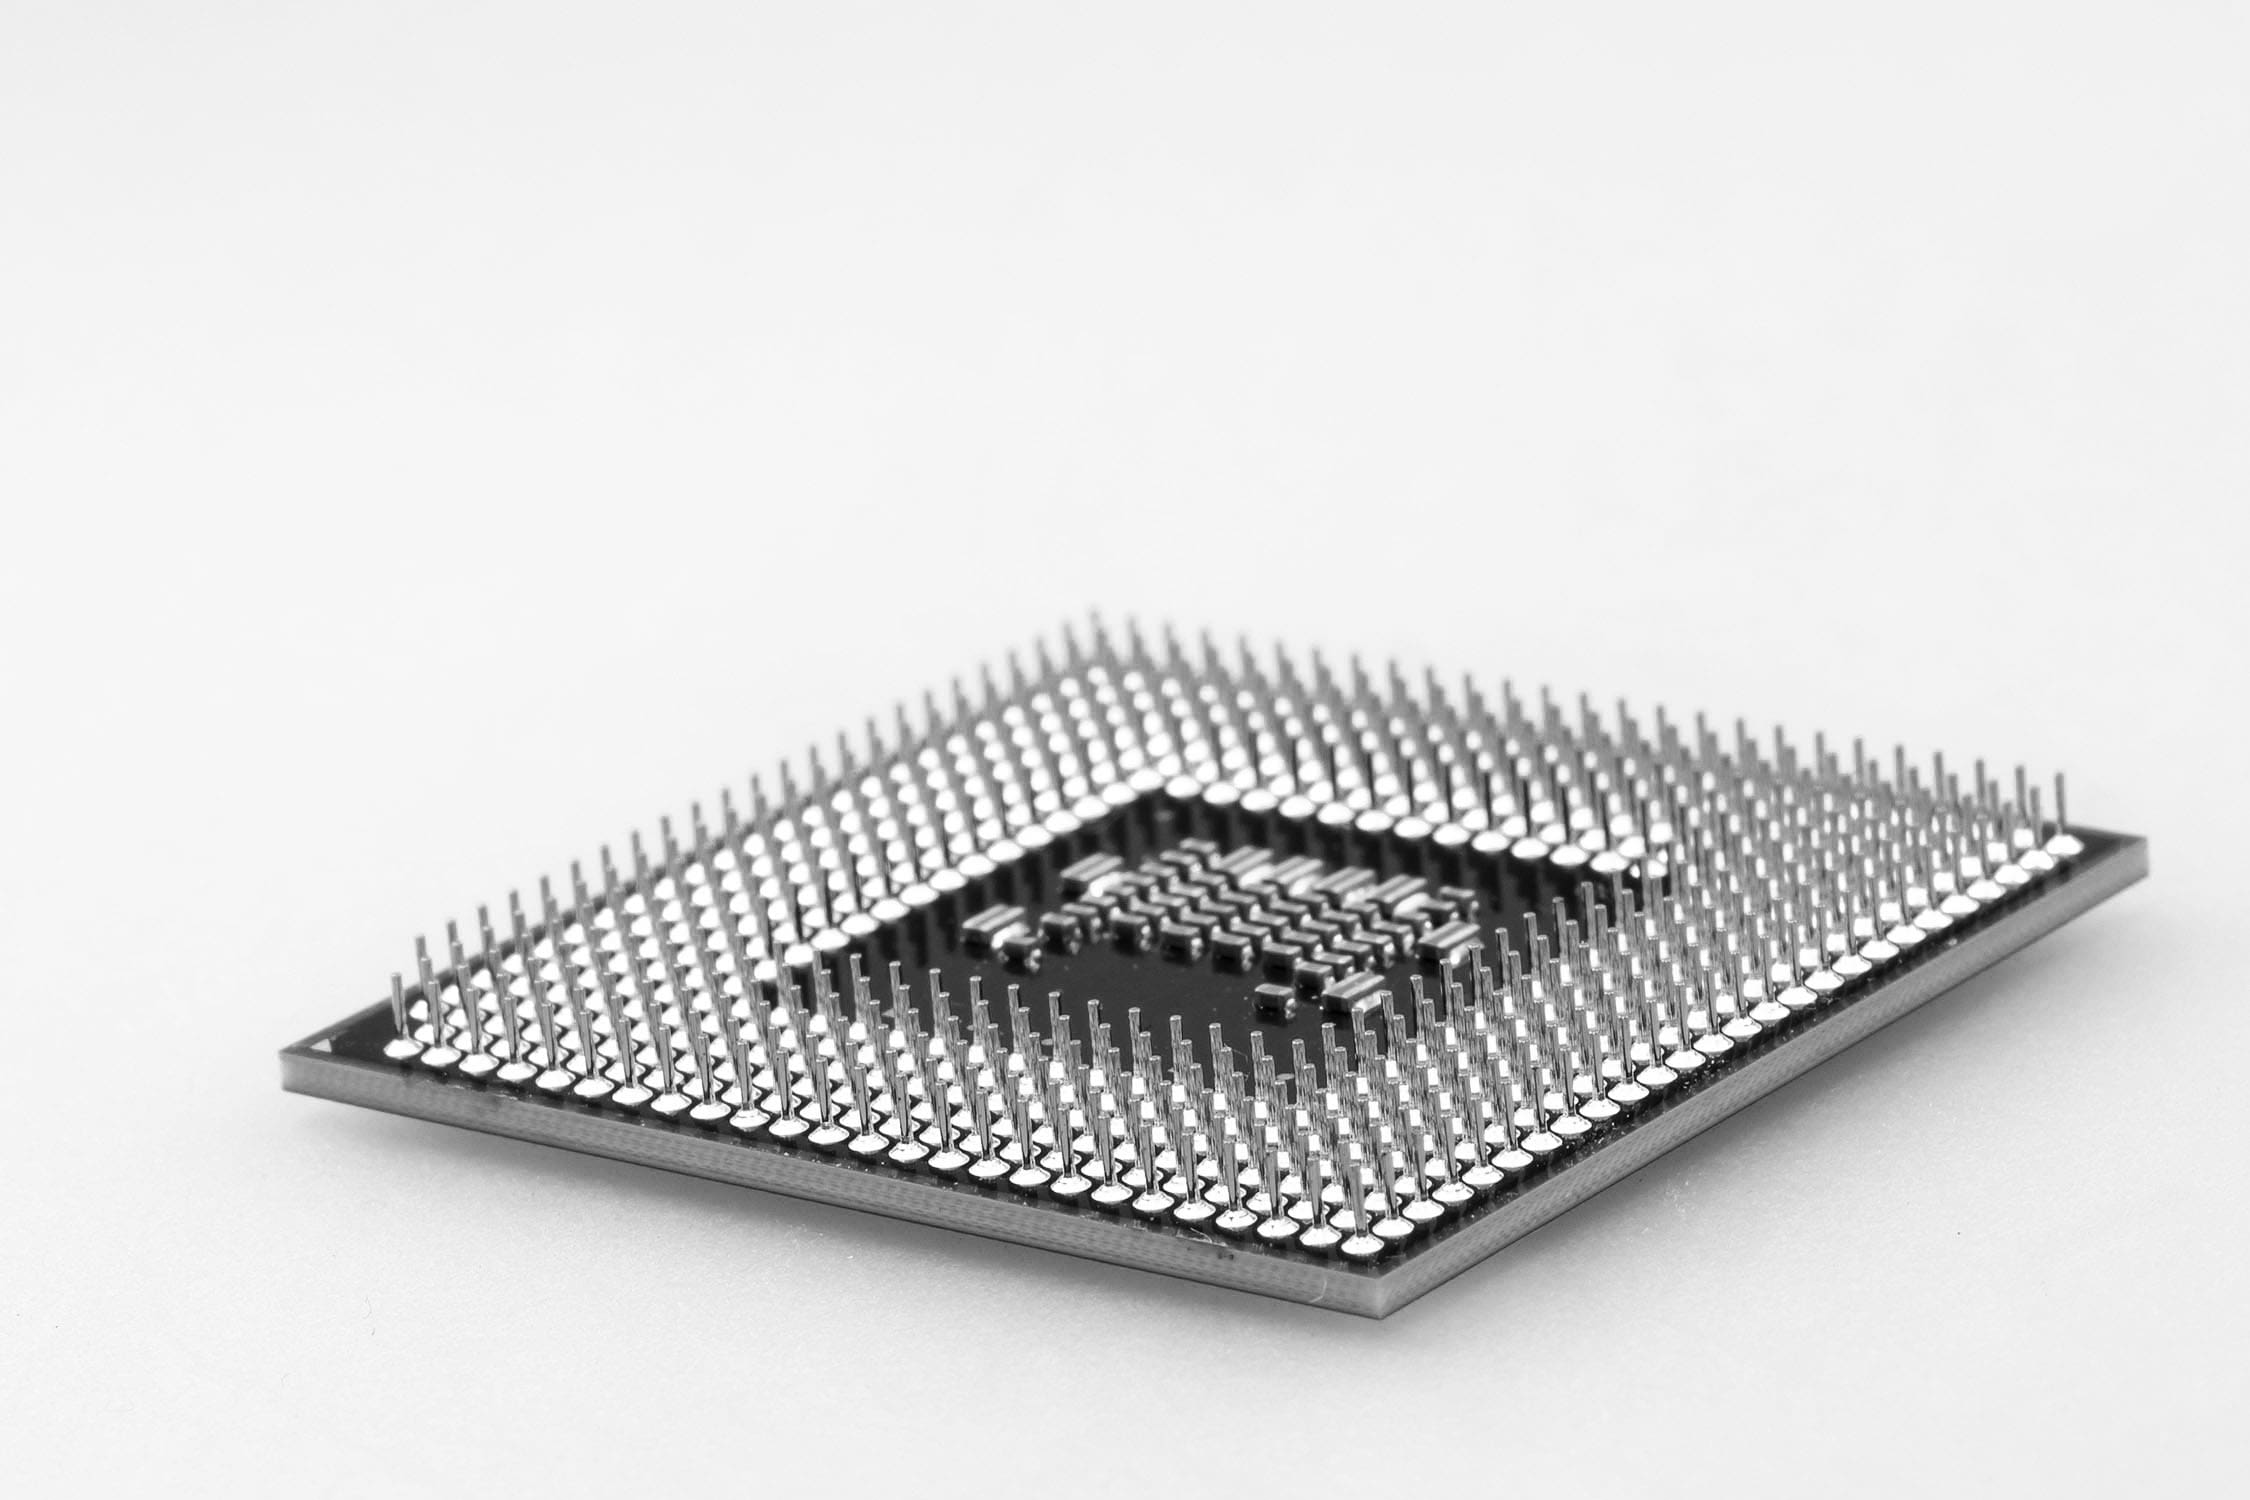 A closeup image of a microprocessor